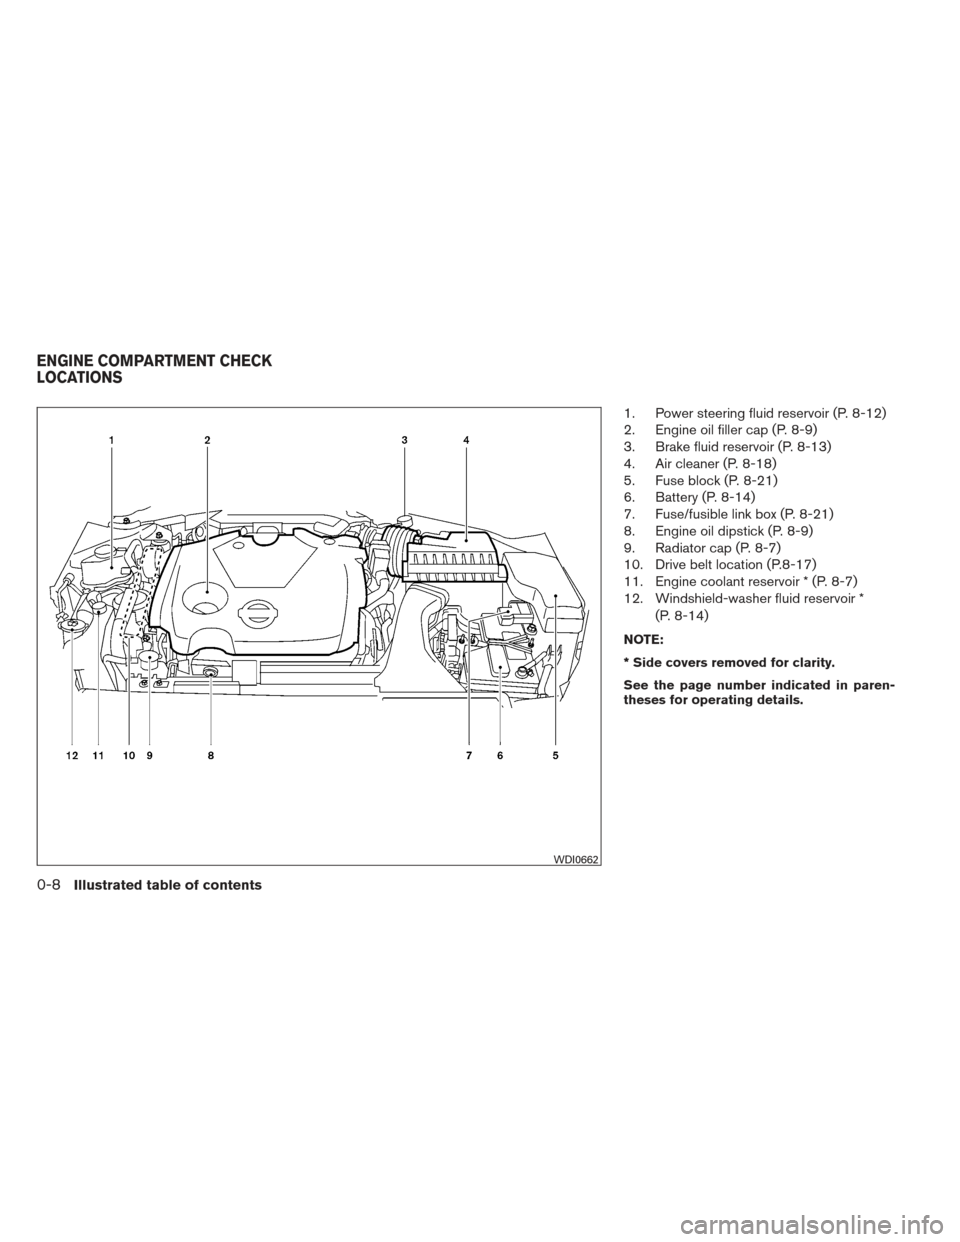 NISSAN MAXIMA 2012 A35 / 7.G Owners Manual 1. Power steering fluid reservoir (P. 8-12)
2. Engine oil filler cap (P. 8-9)
3. Brake fluid reservoir (P. 8-13)
4. Air cleaner (P. 8-18)
5. Fuse block (P. 8-21)
6. Battery (P. 8-14)
7. Fuse/fusible l